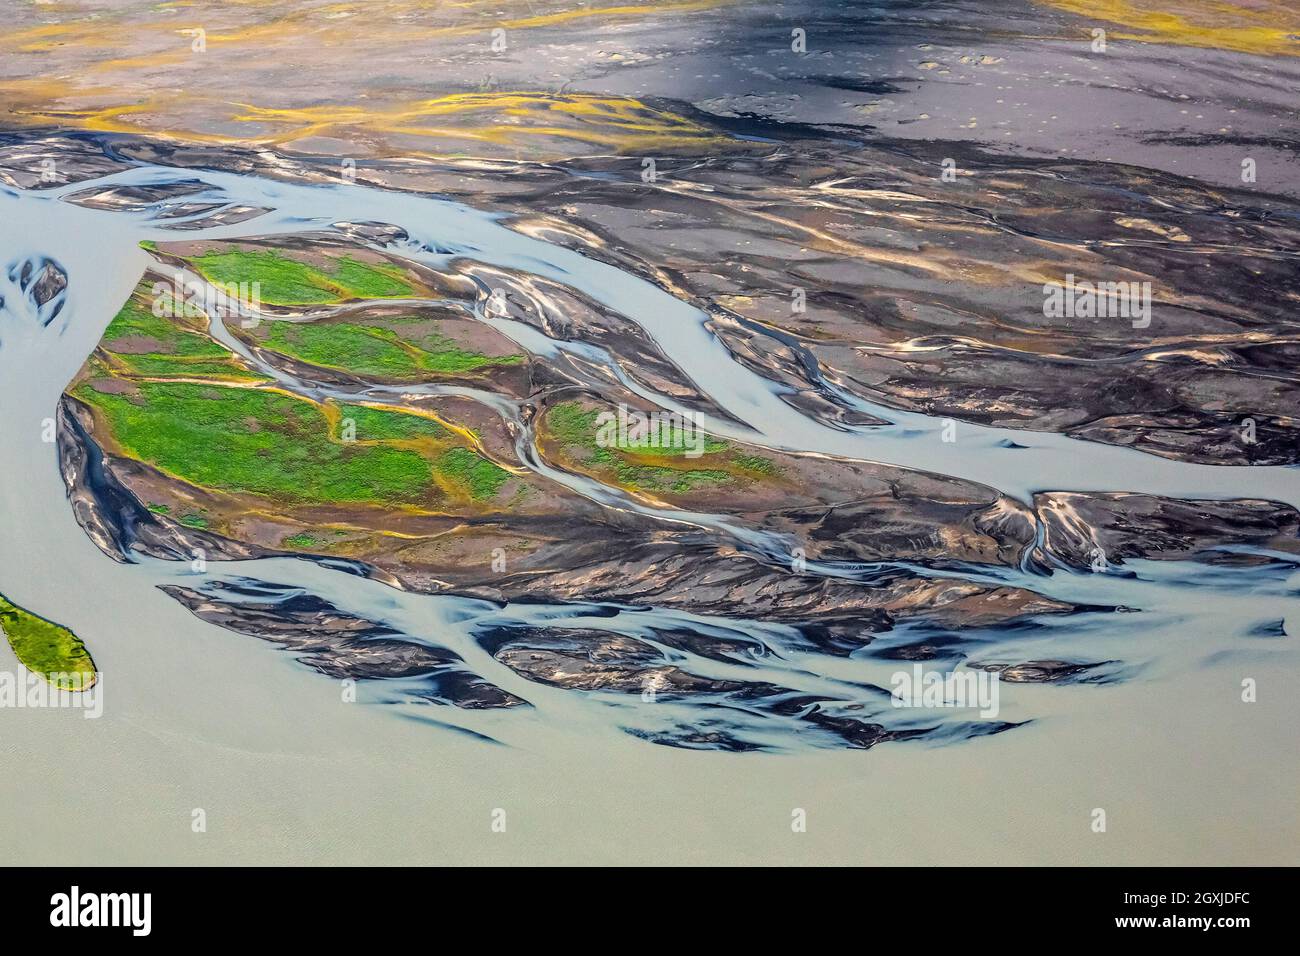 Vista aerea sul ghiacciaio Þjórsá / Thjorsa in estate, il fiume più lungo d'Islanda Foto Stock